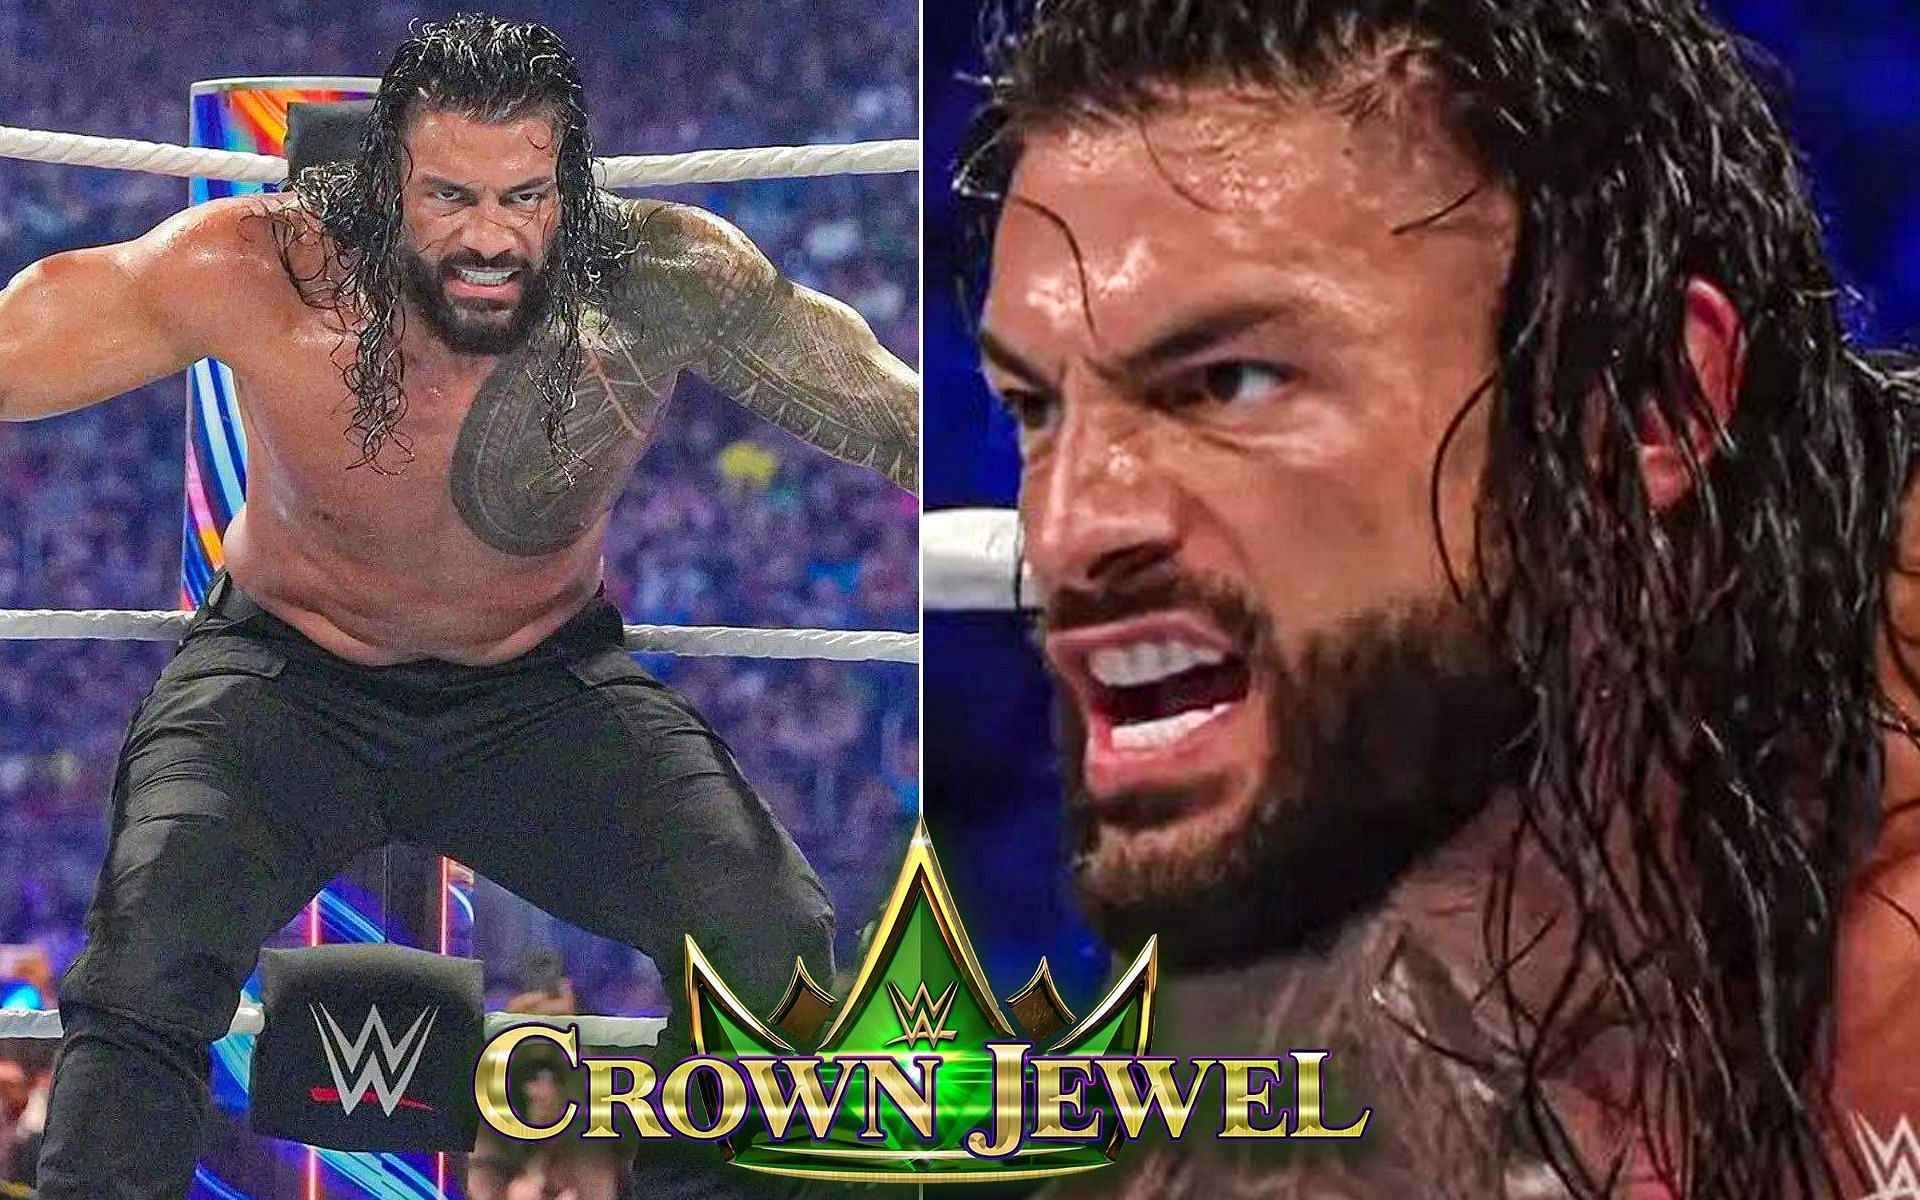 Crown Jewel 2023 is the second Saudi Arabia show of WWE